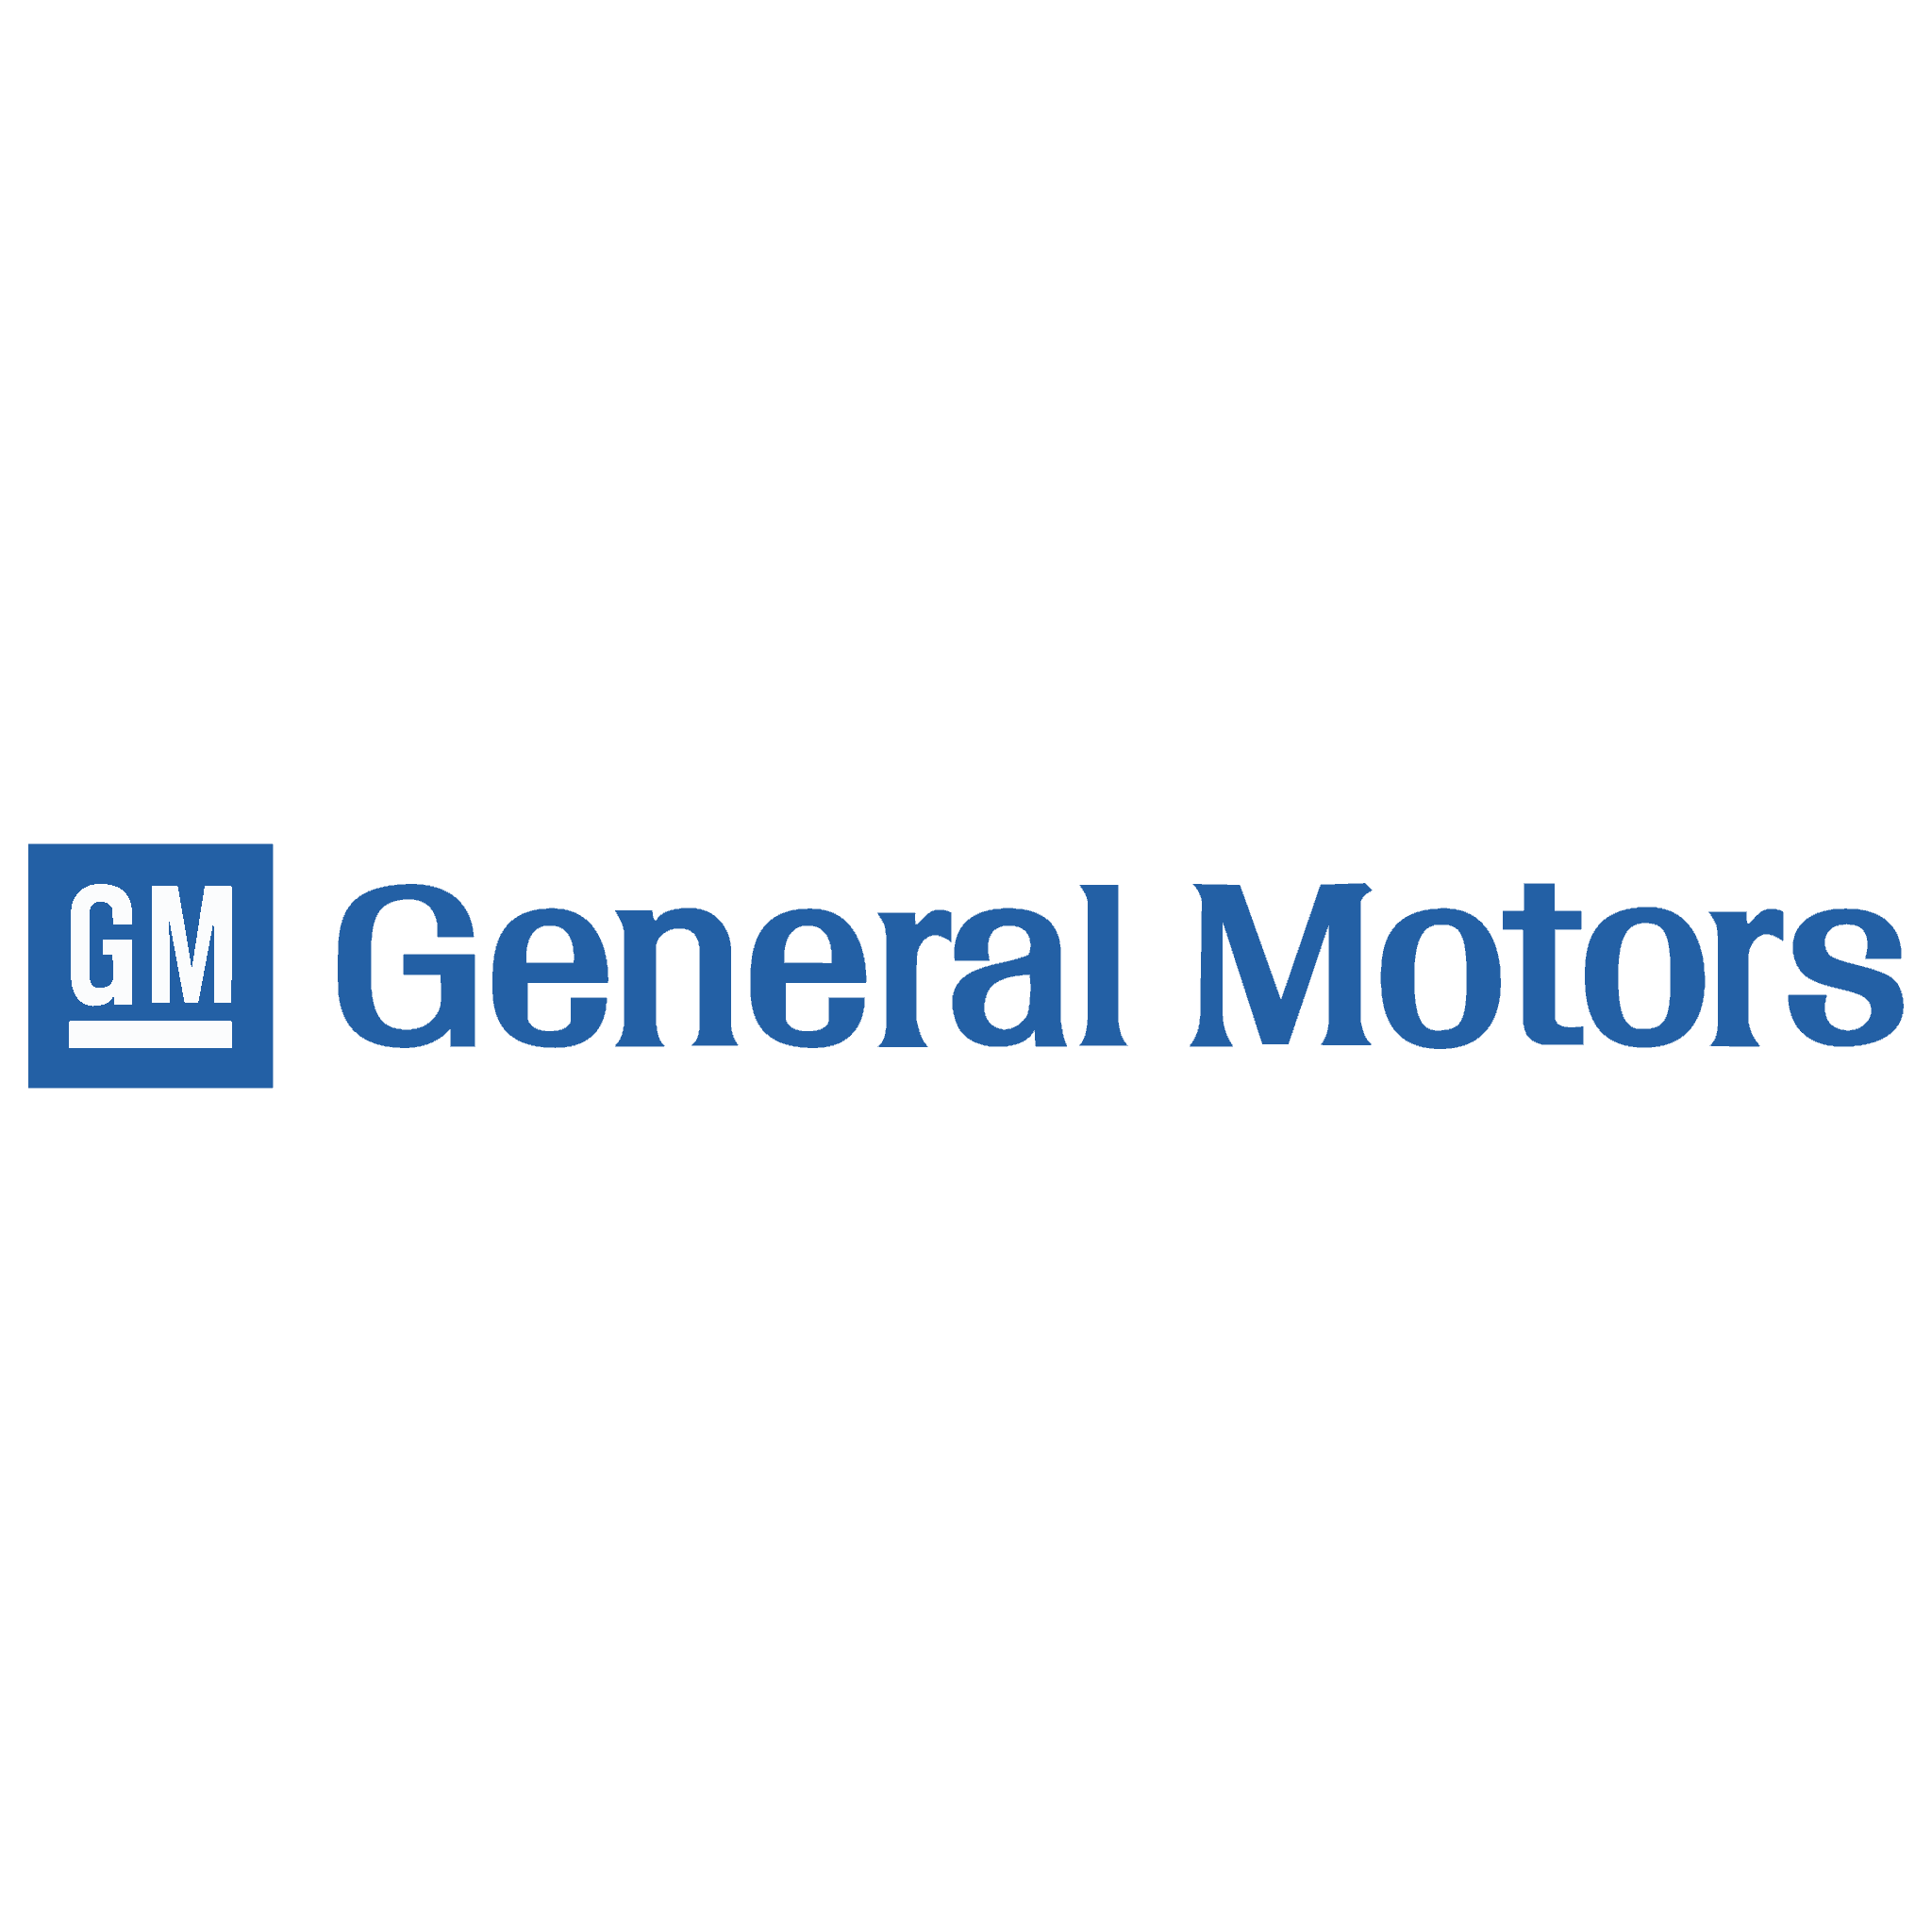 General motors Wave Analysis – 18 January, 2022